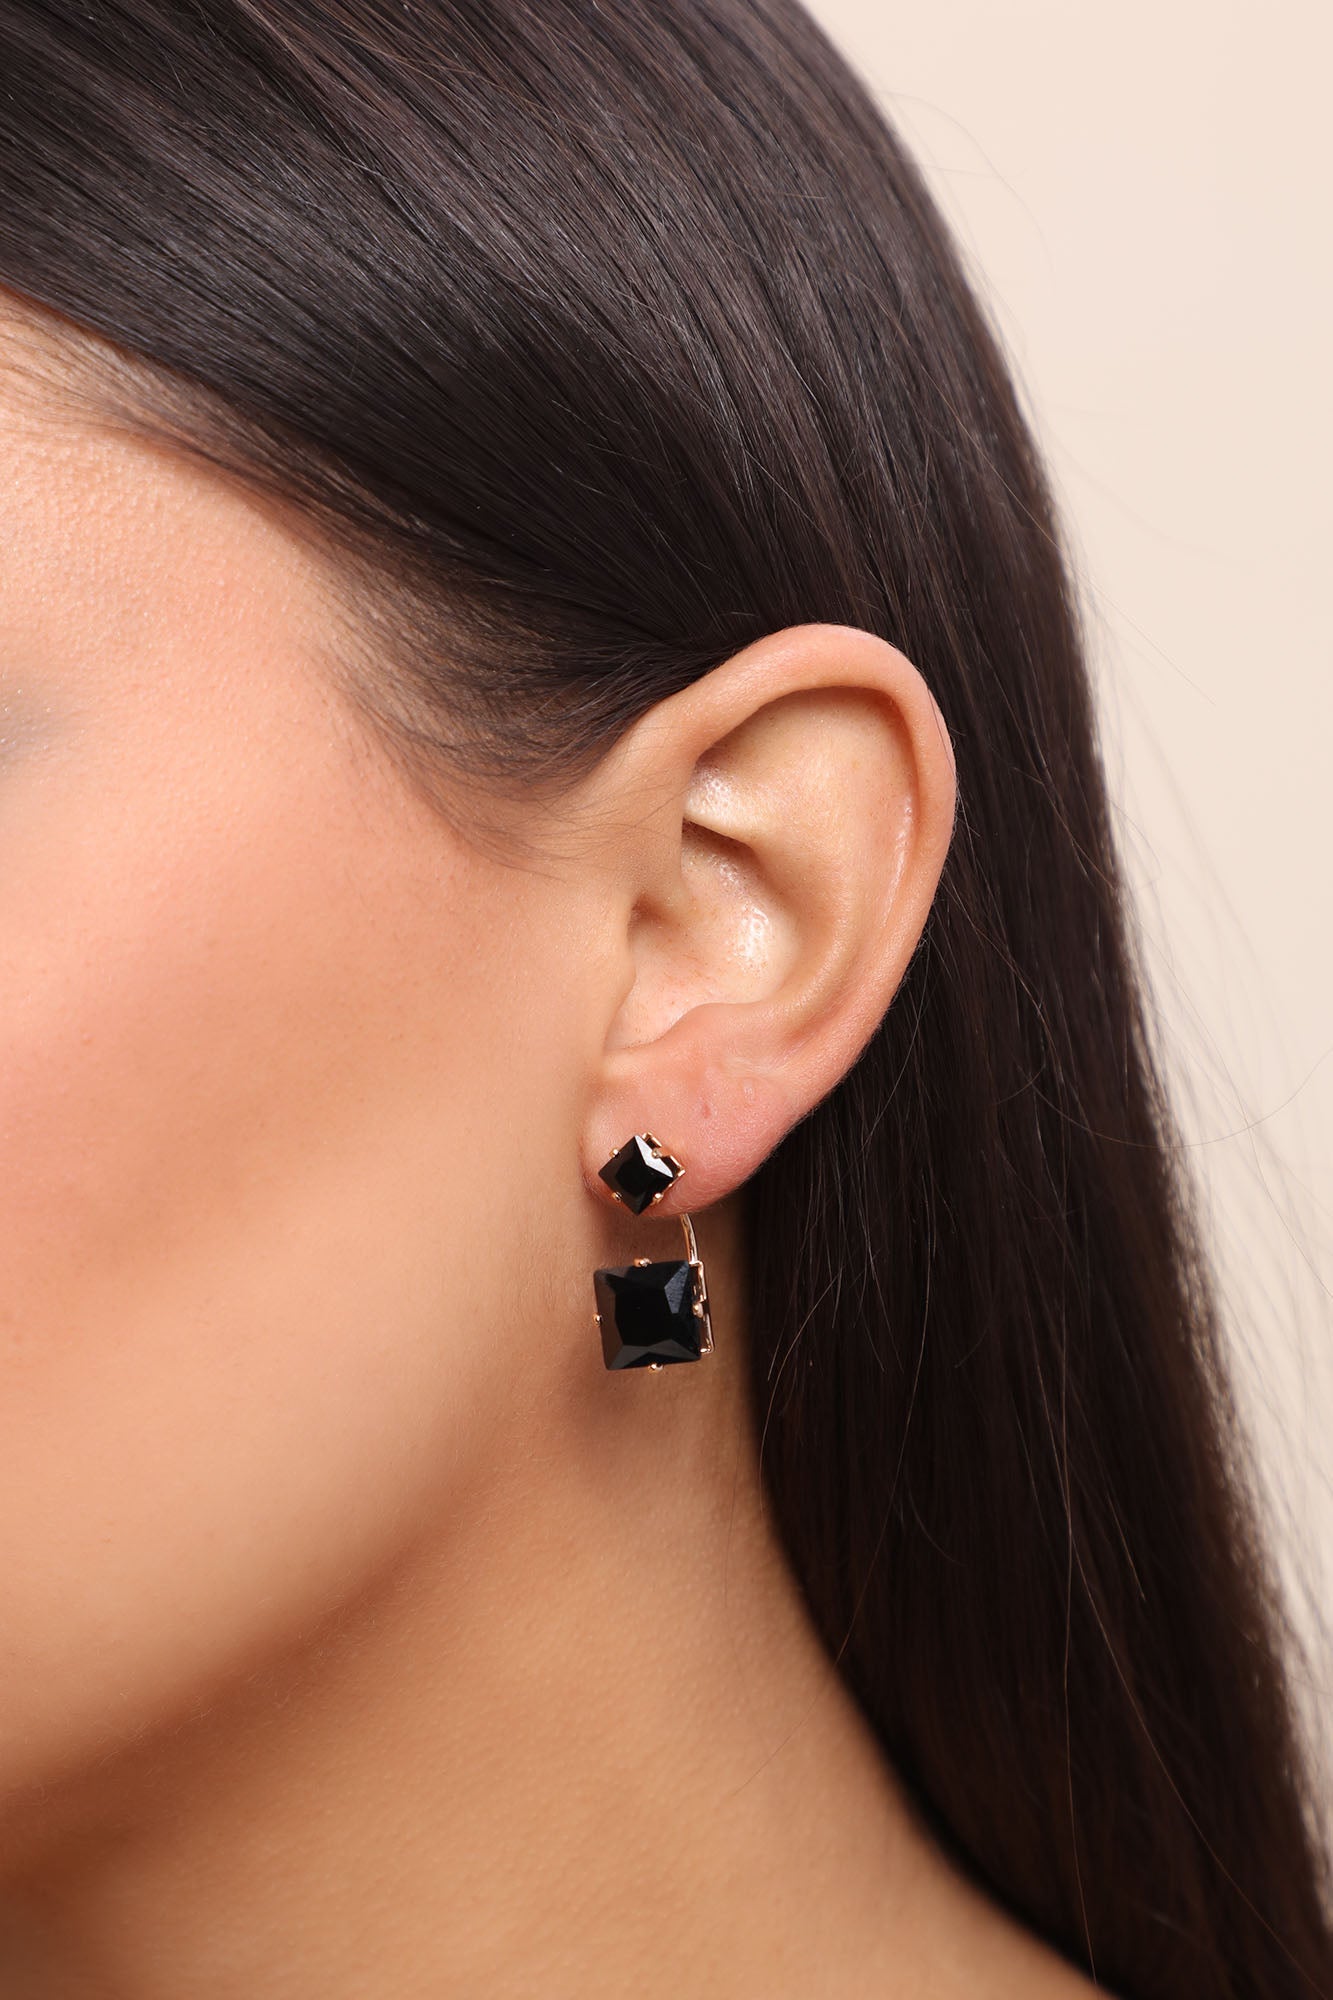 Simplicity Rhinestone Stud Earrings - Green